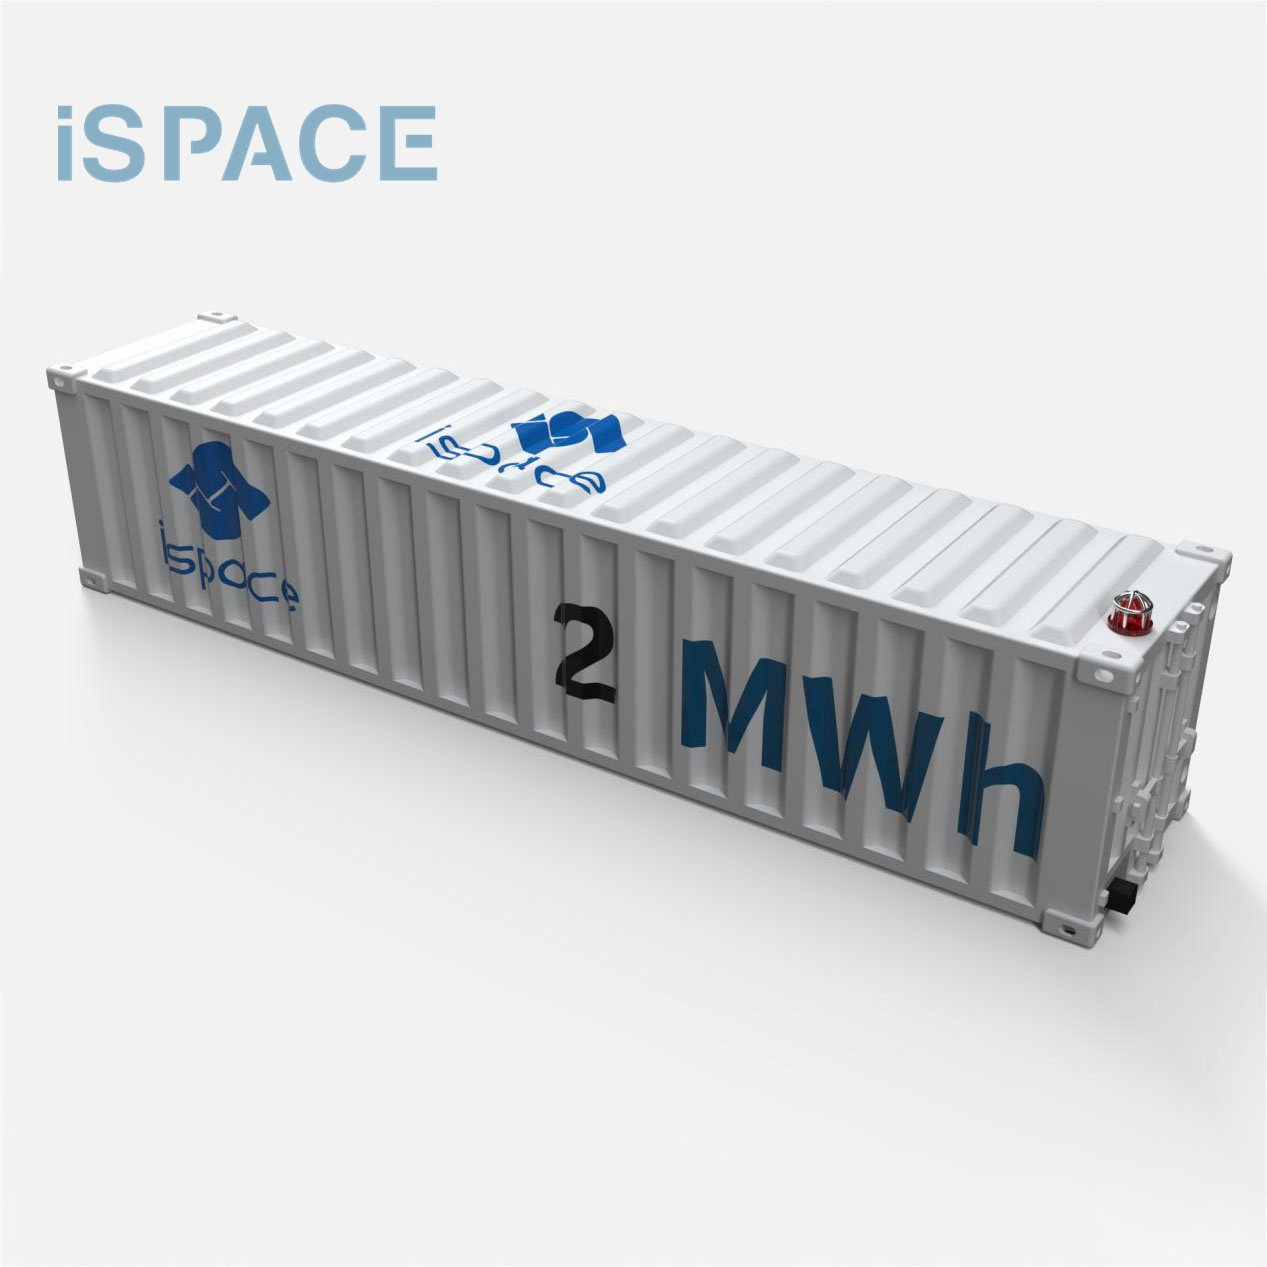 Industrijski i komercijalni kontejnerski sistem za skladištenje energije u kombinaciji sa solarnim sistemom